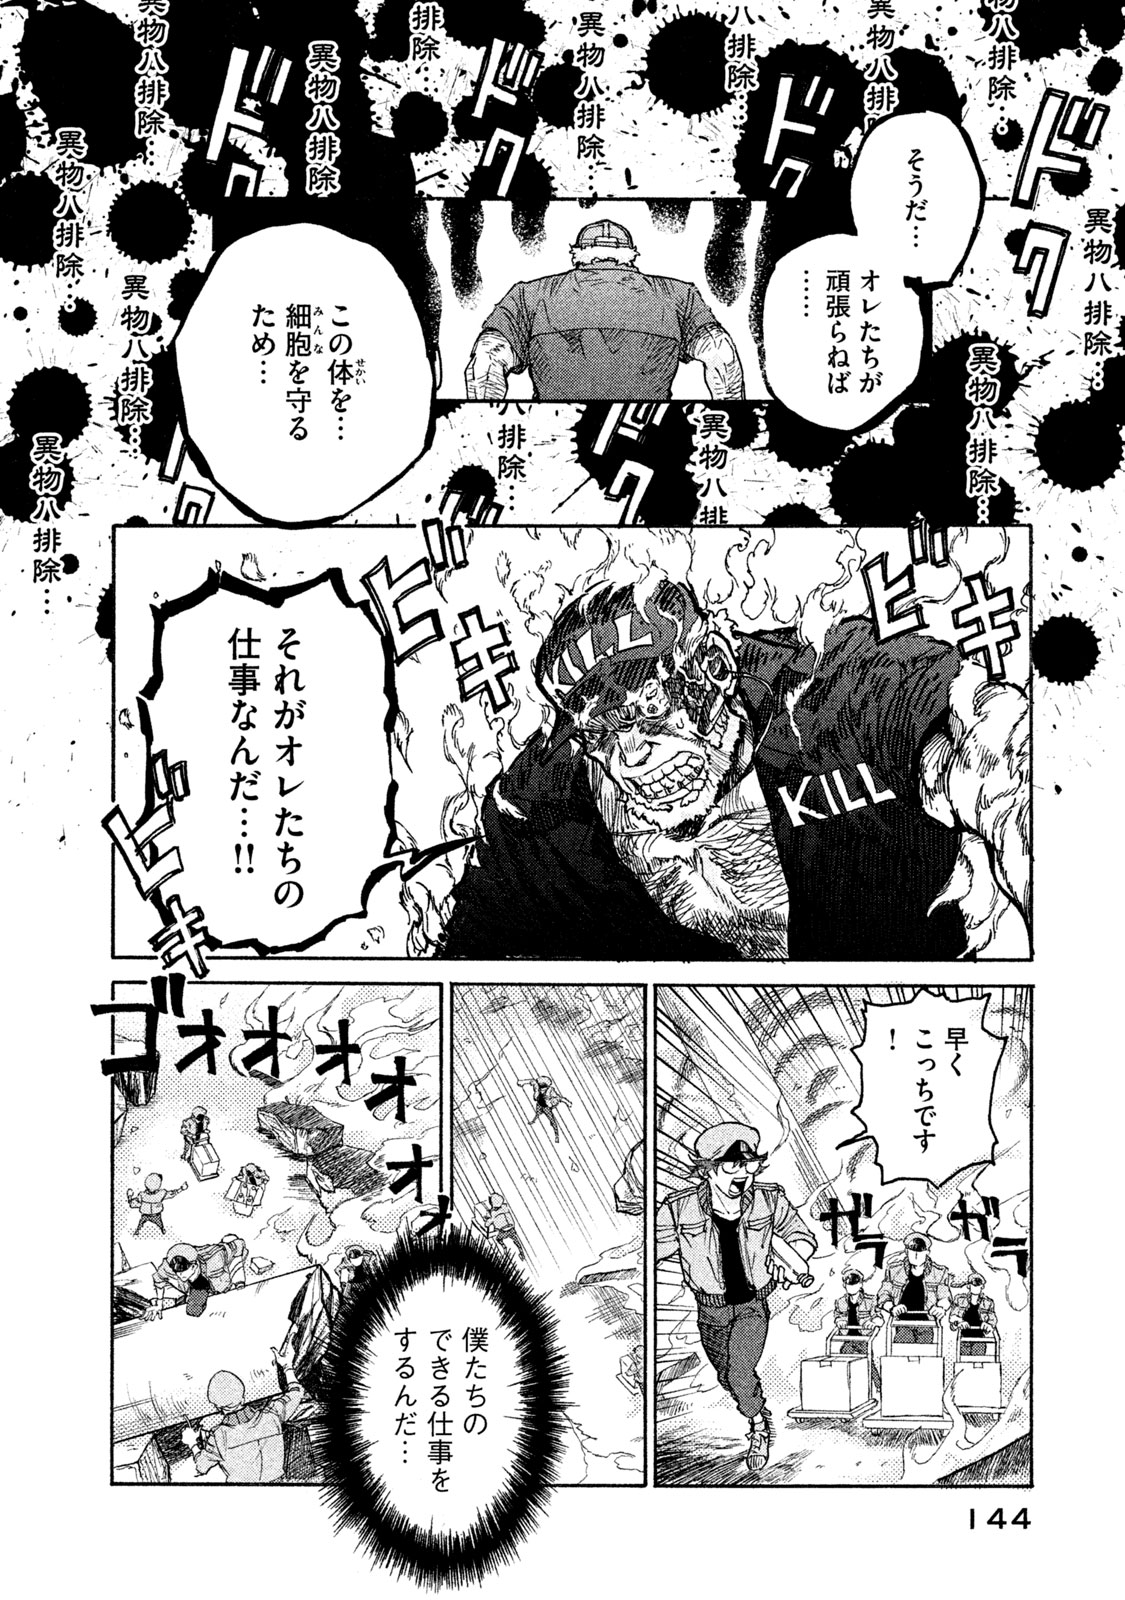 Hataraku Saibou BLACK - Chapter 5 - Page 18